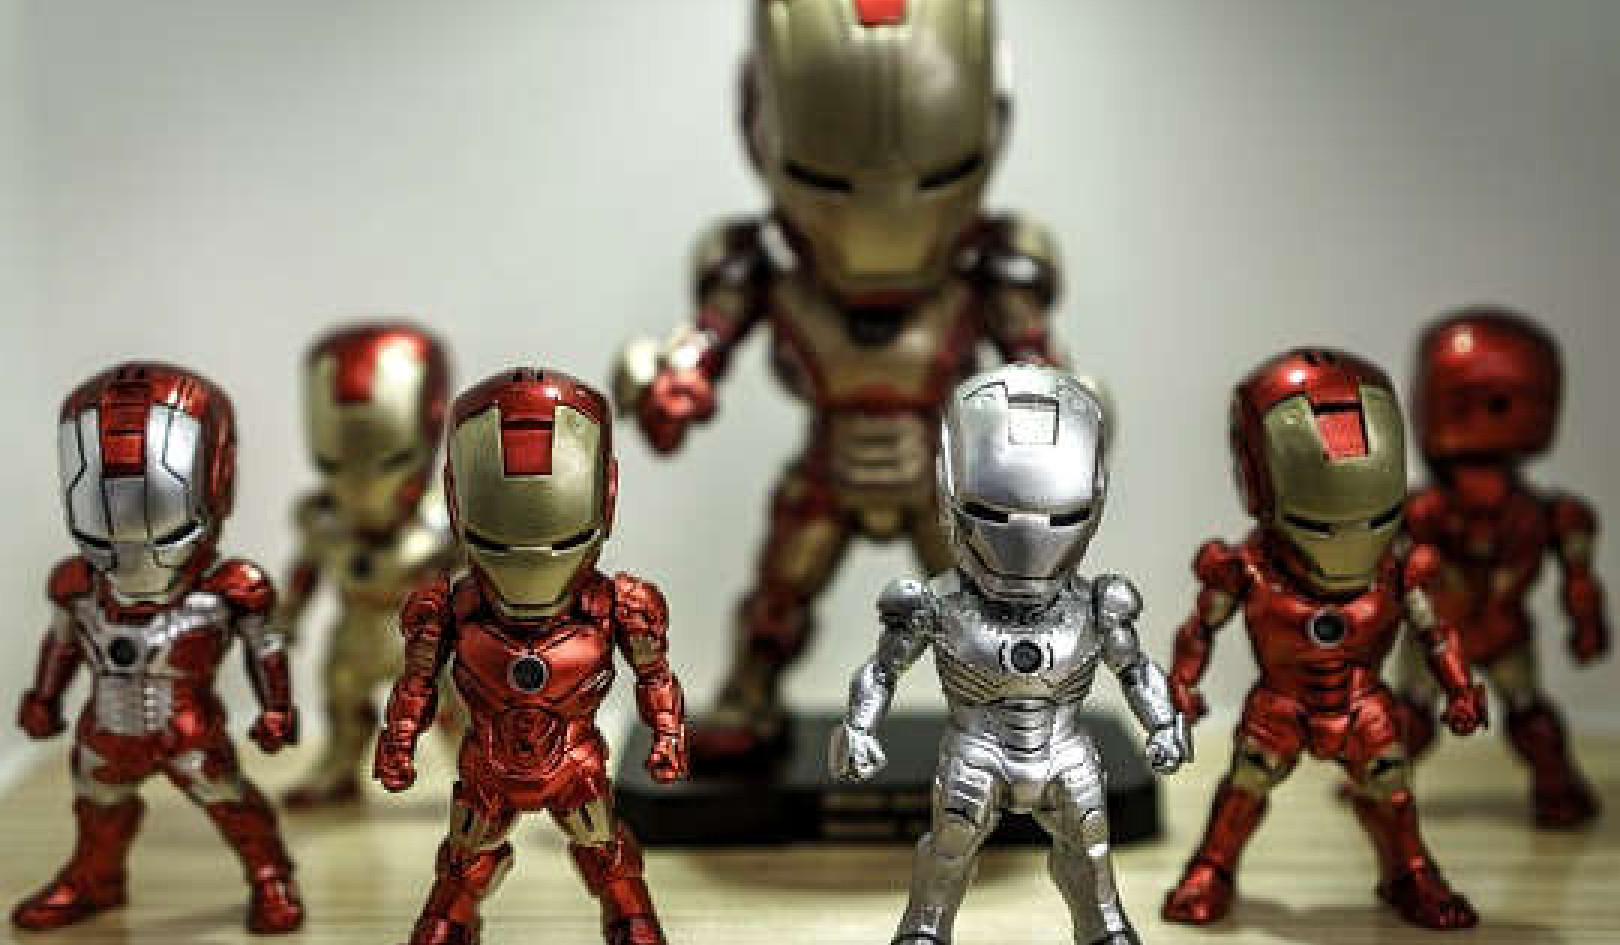 Iron Man: ฟุ้งซ่านหรือตื่นตัว?